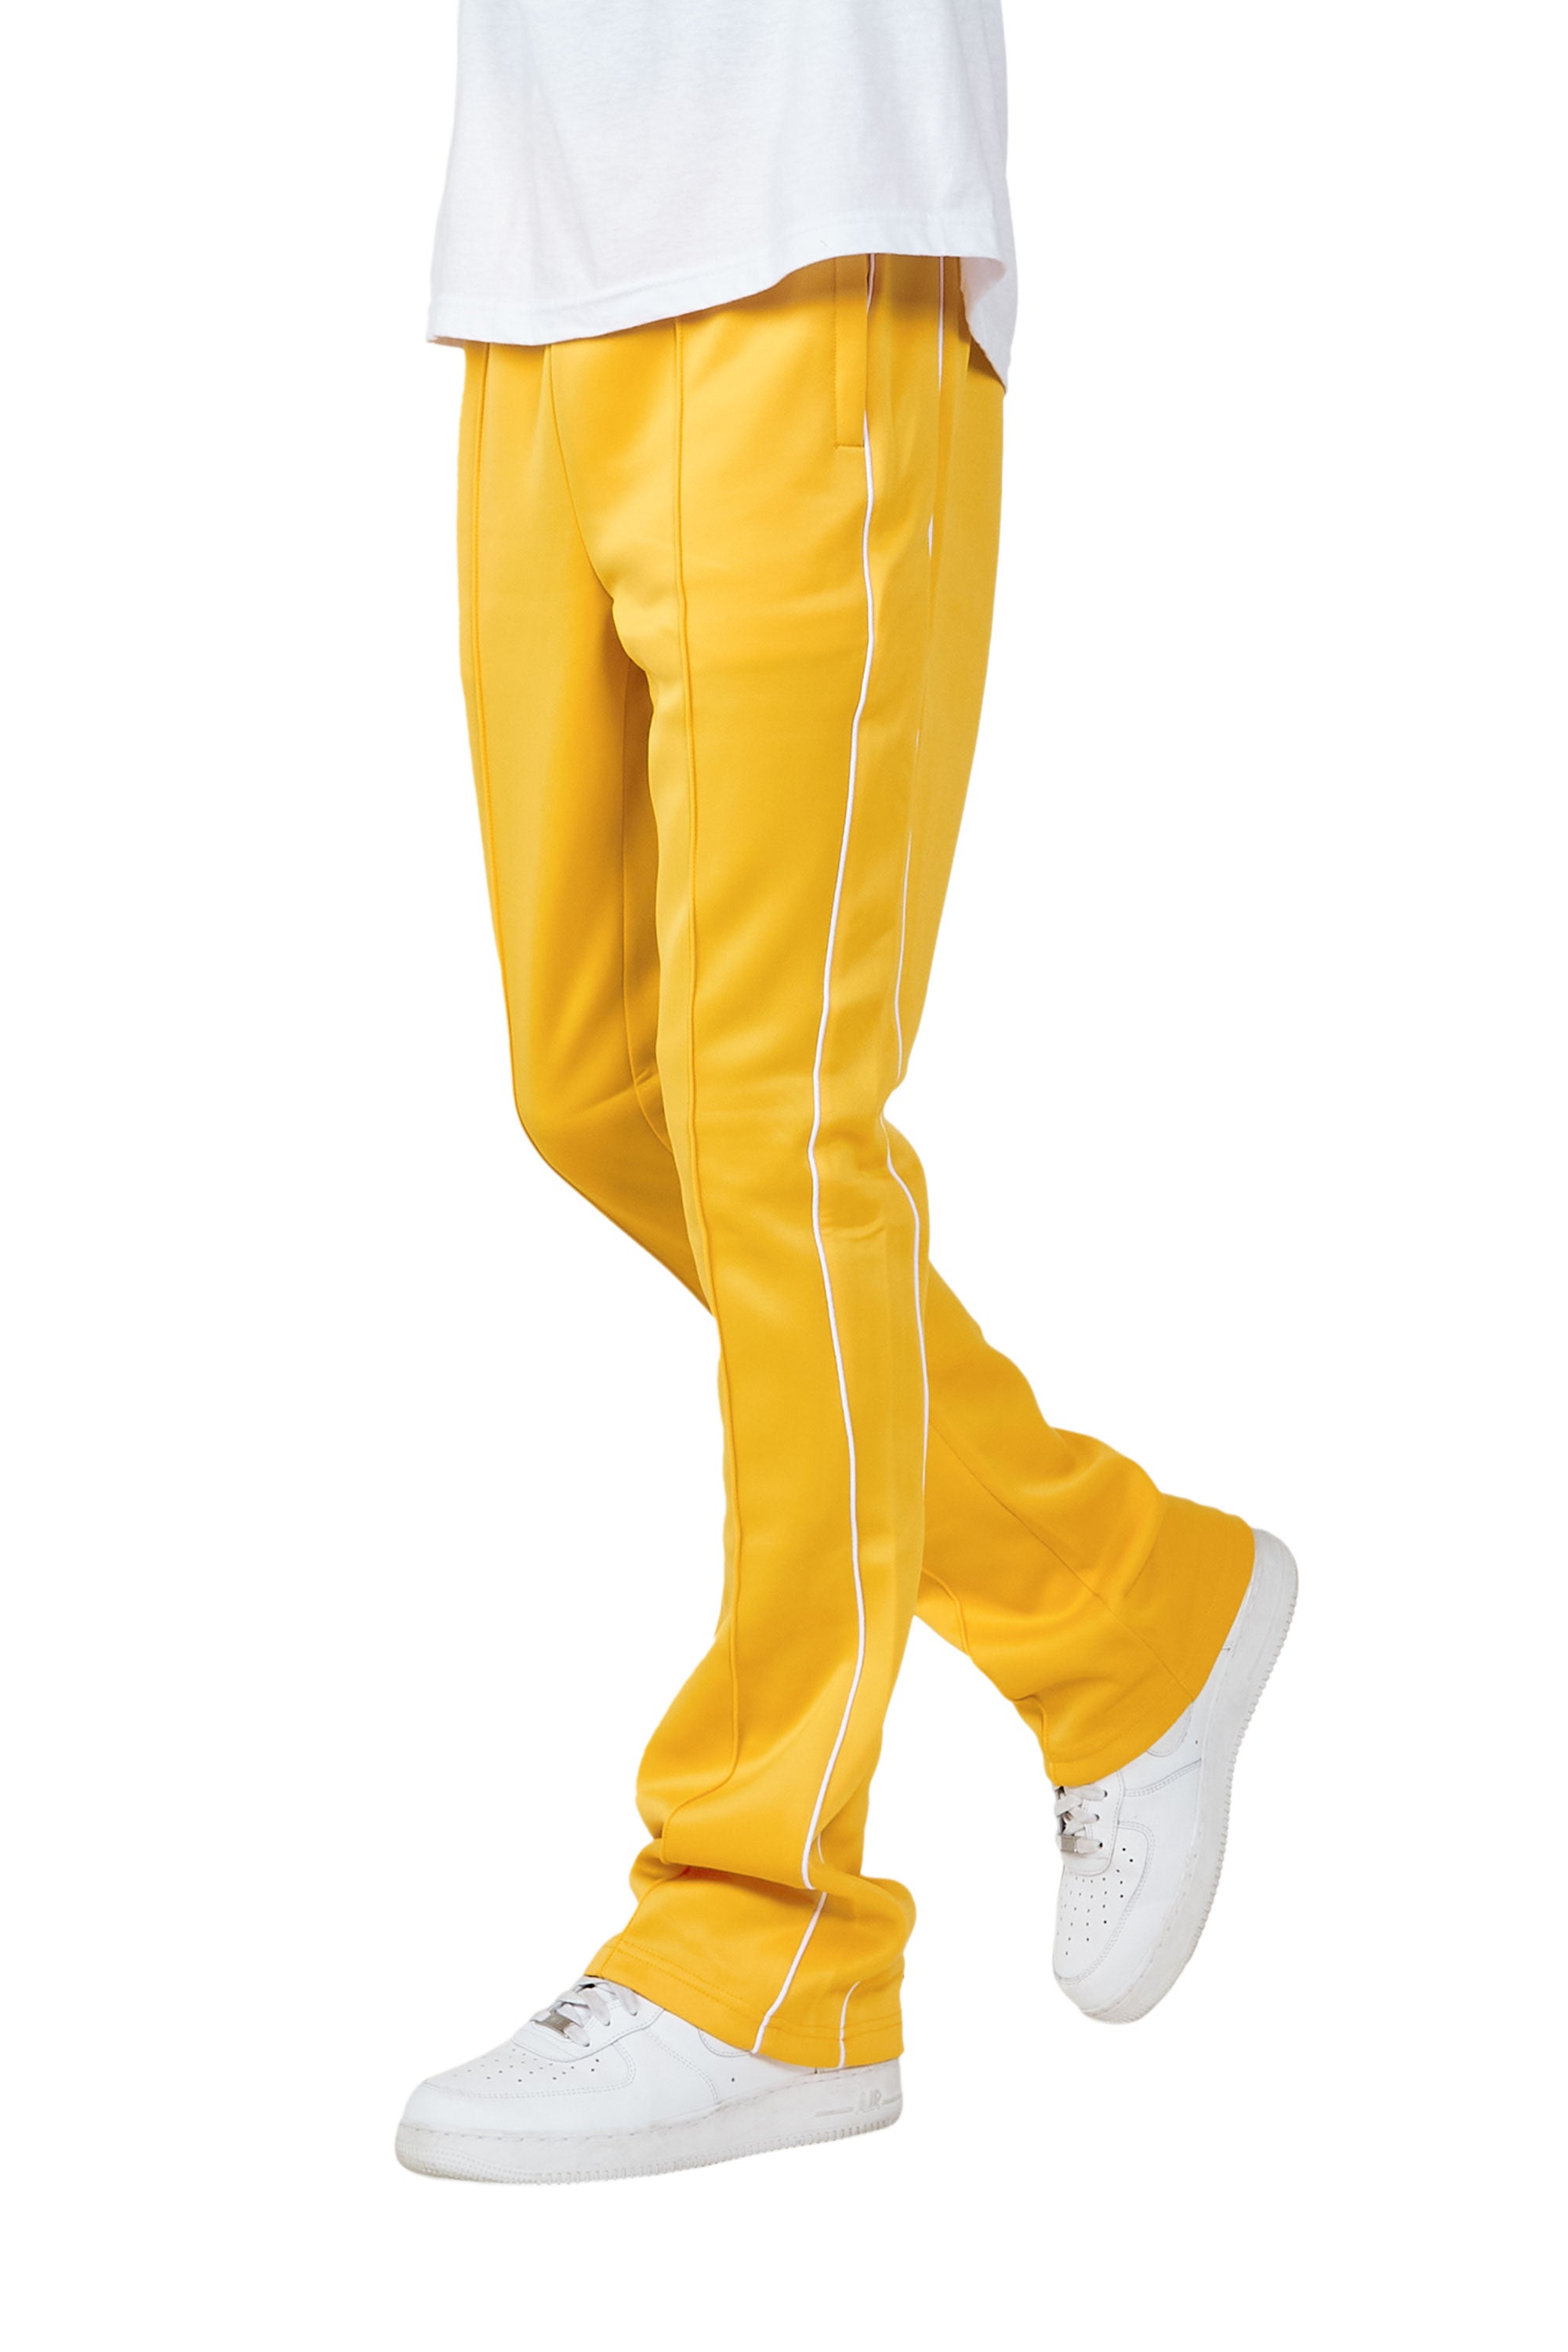 OCTOBERS VERY OWN OVO Men's Yellow Classic Track Pants w/ Zip Legs NWT |  eBay